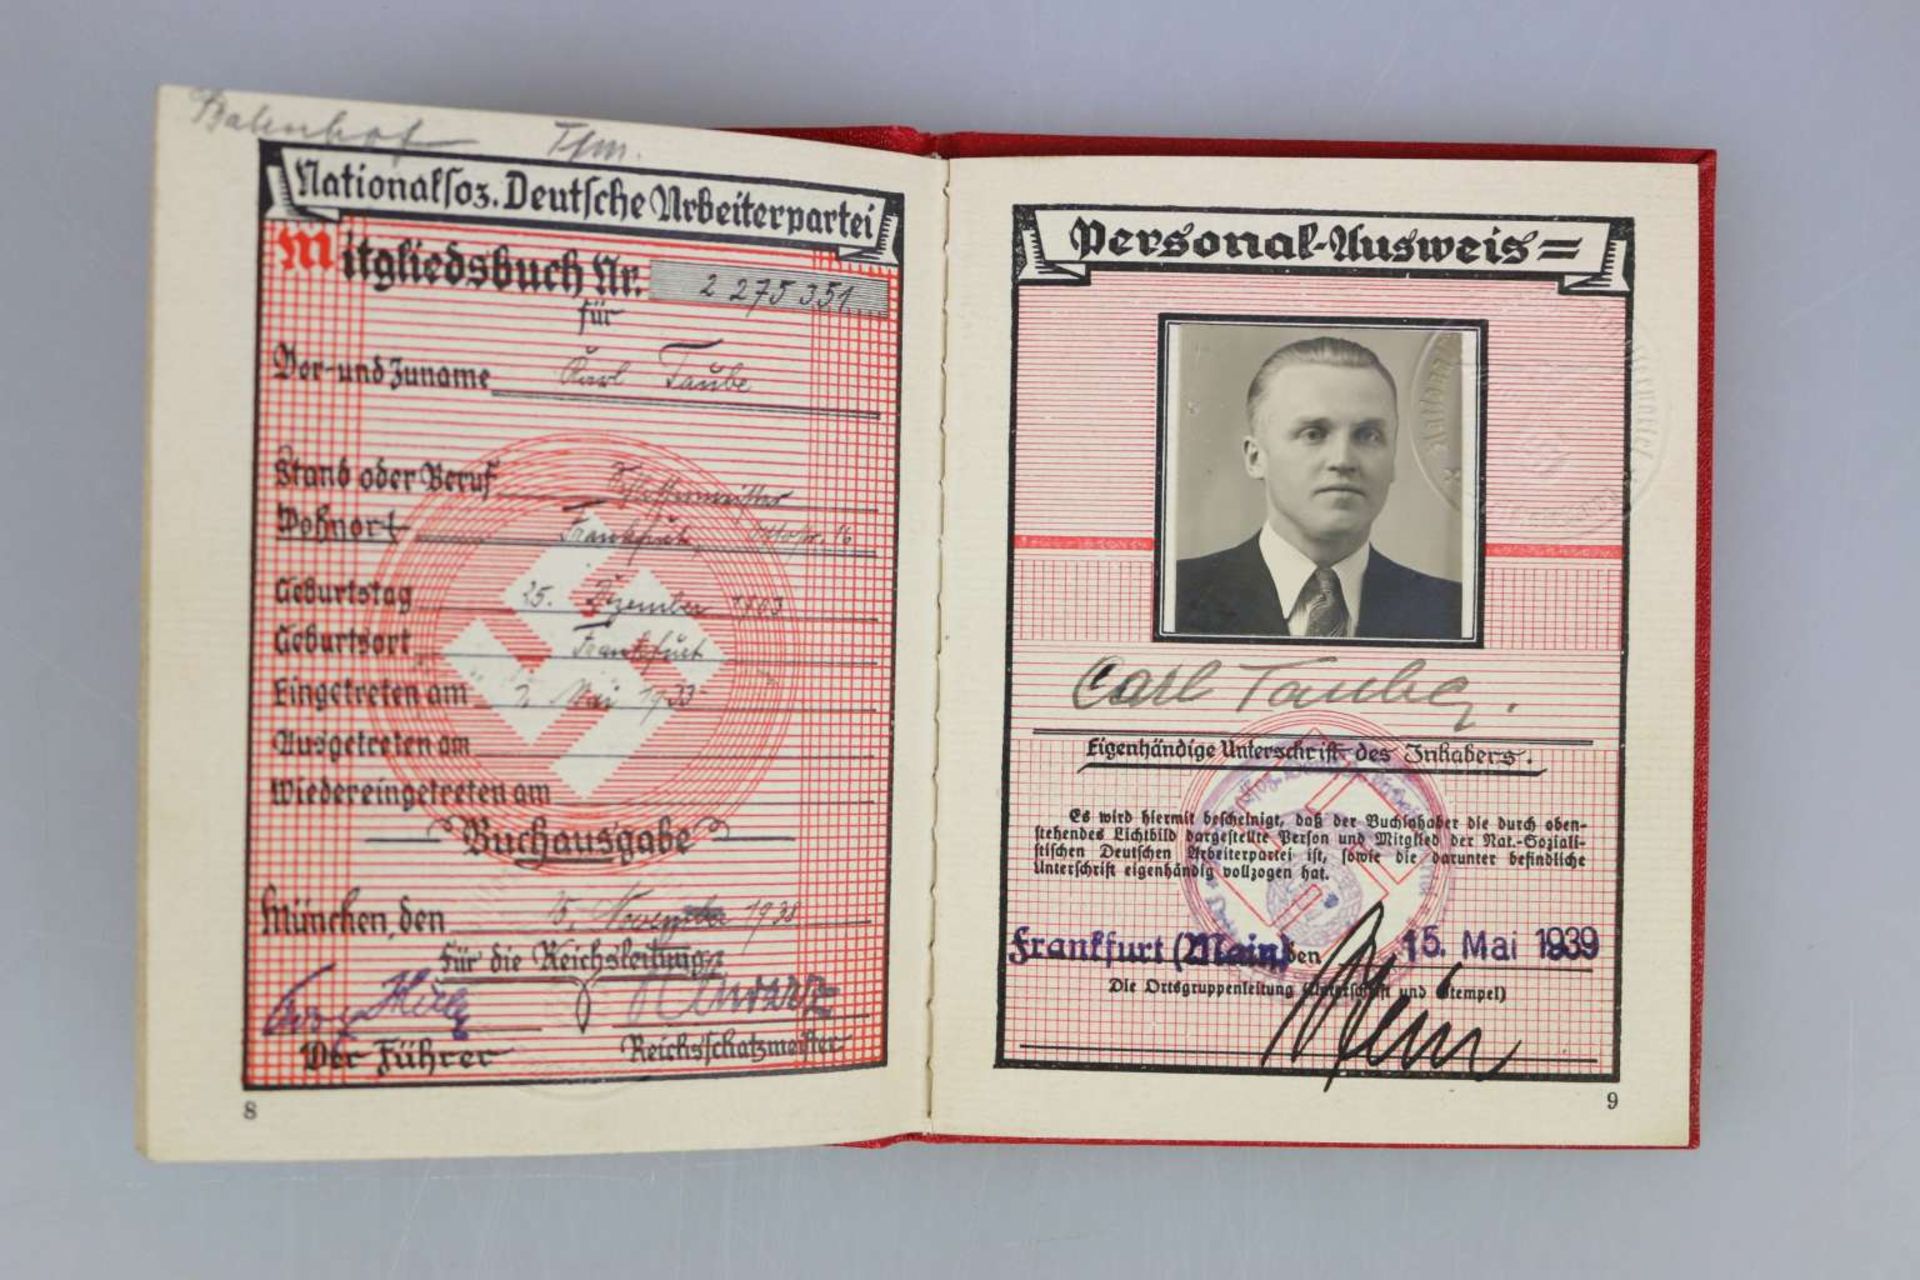 NSDAP - Mitgliedsbuch Nr. 2275351. - Image 3 of 4